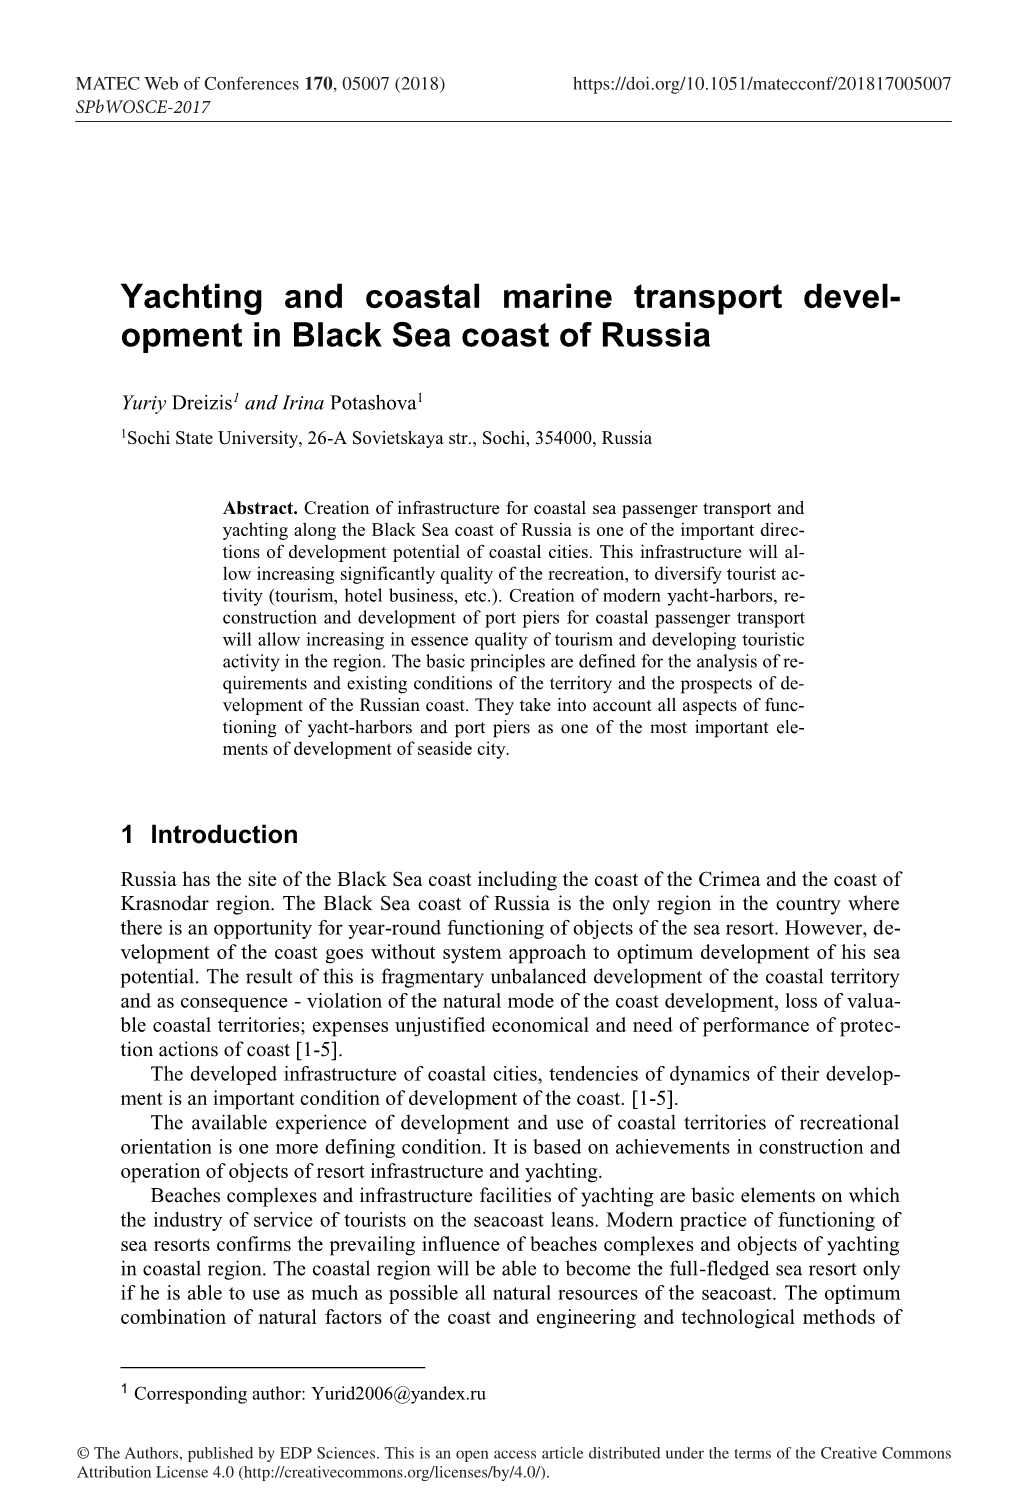 Yachting and Coastal Marine Transport Development in Black Sea Coast of Russia